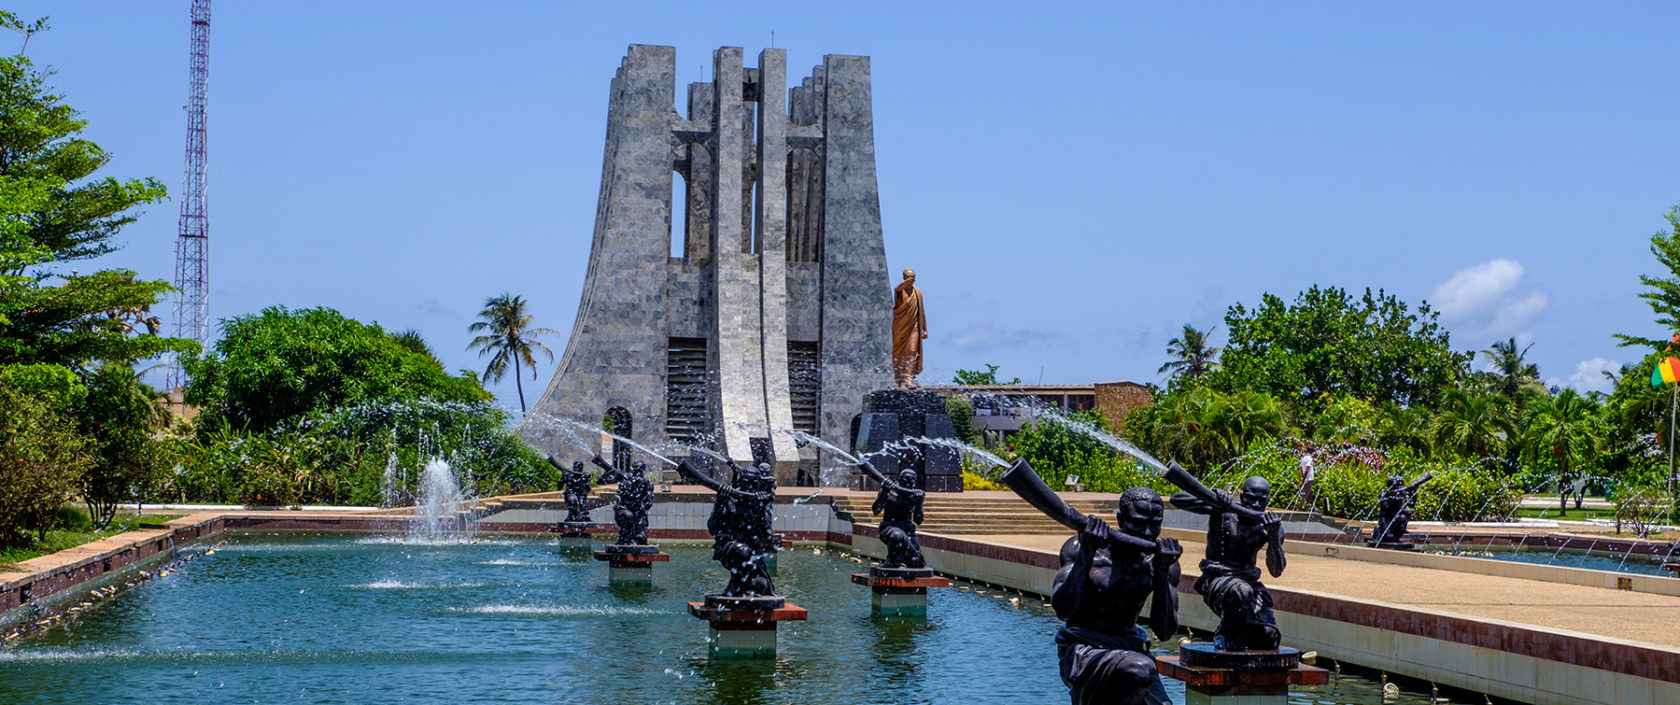 male statues in fountain Accra, Ghana